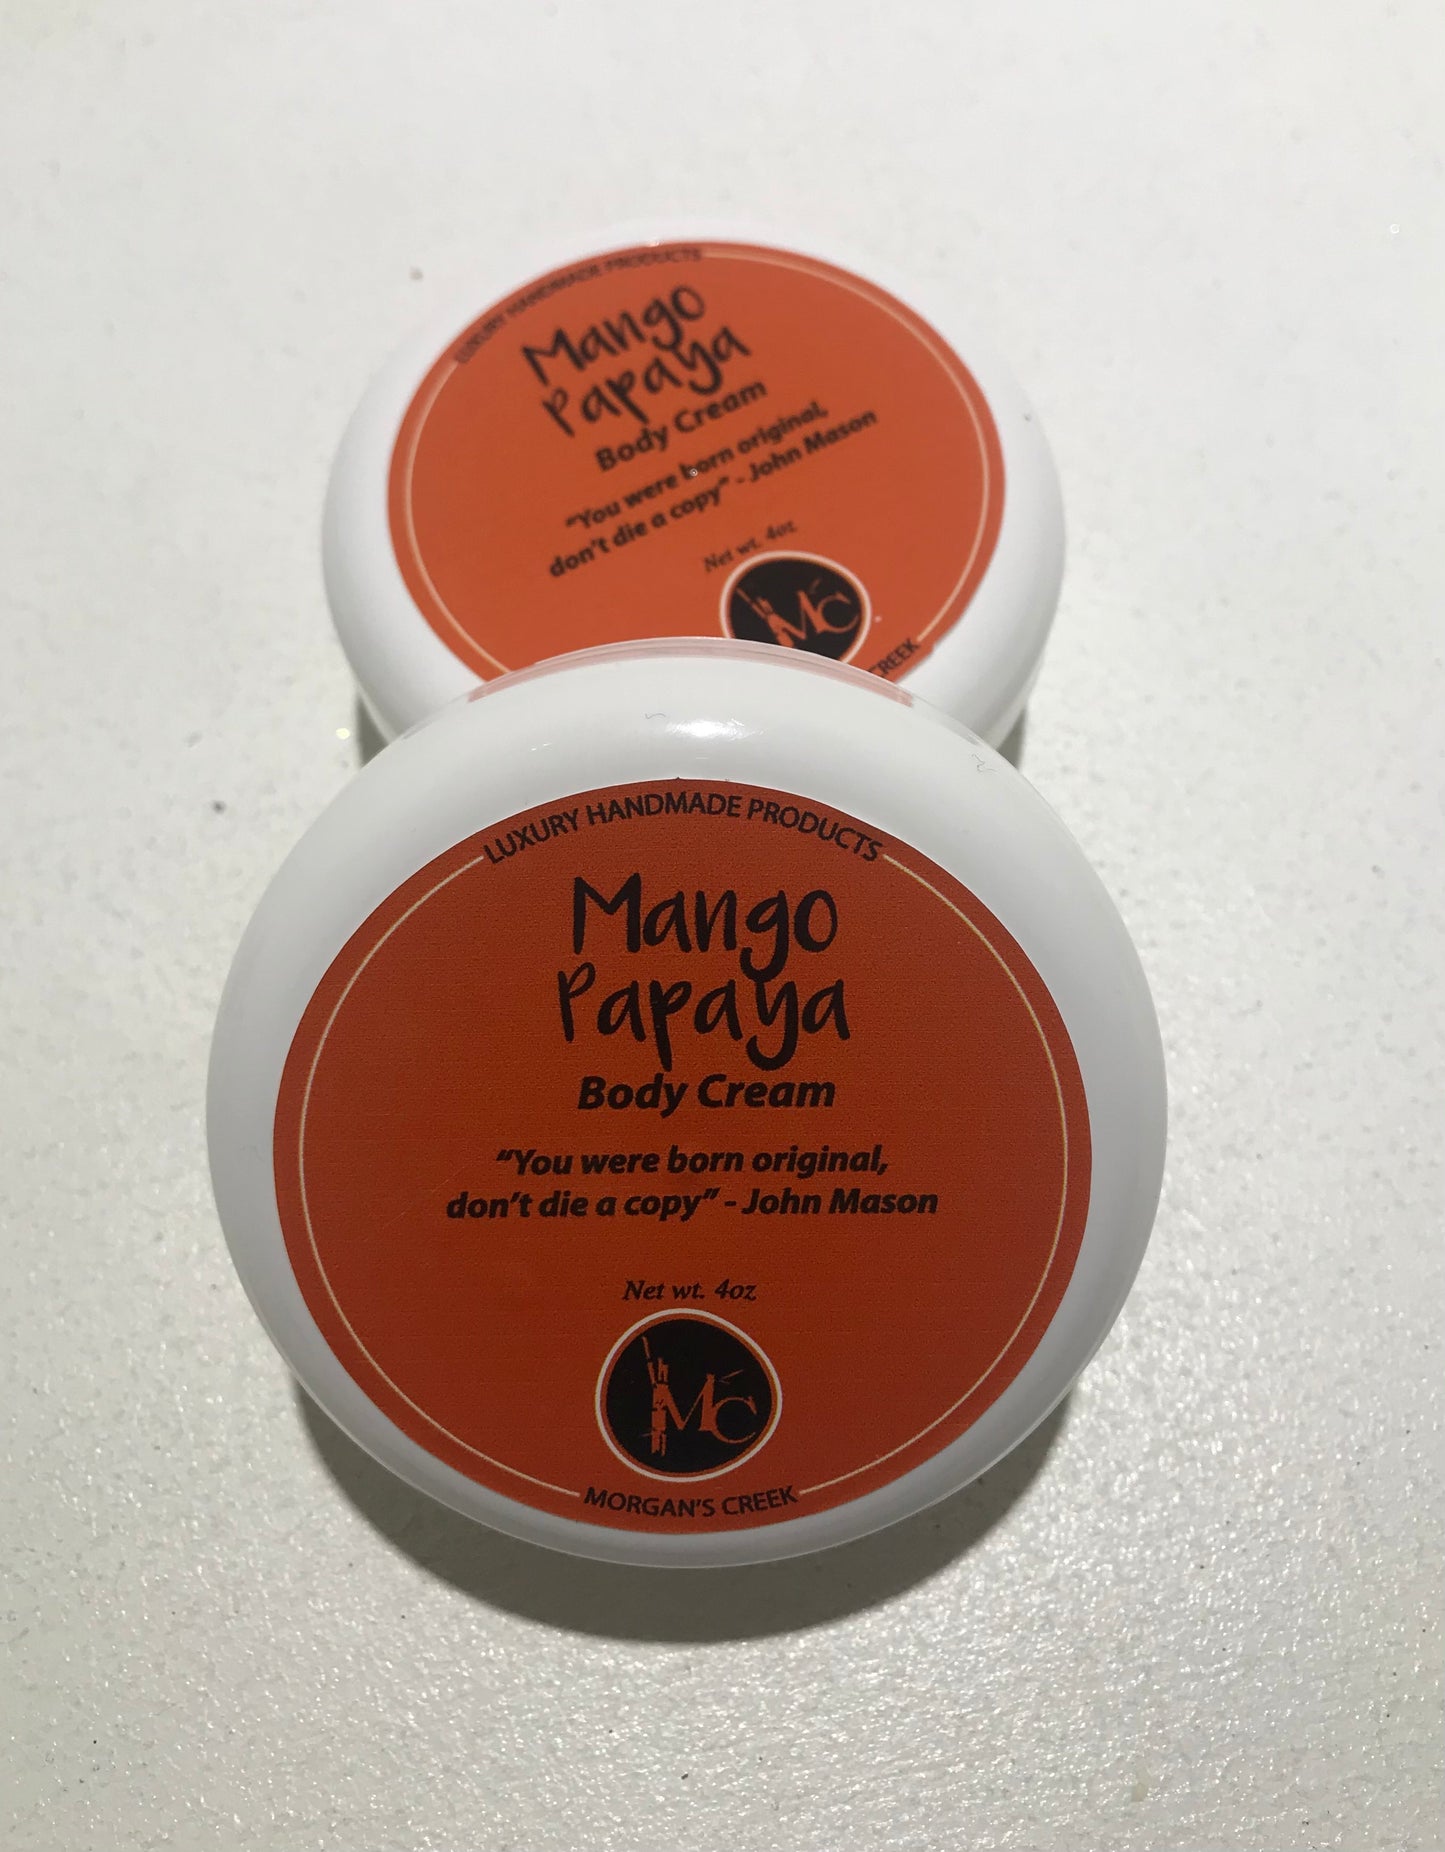 Mango Papaya Body Cream